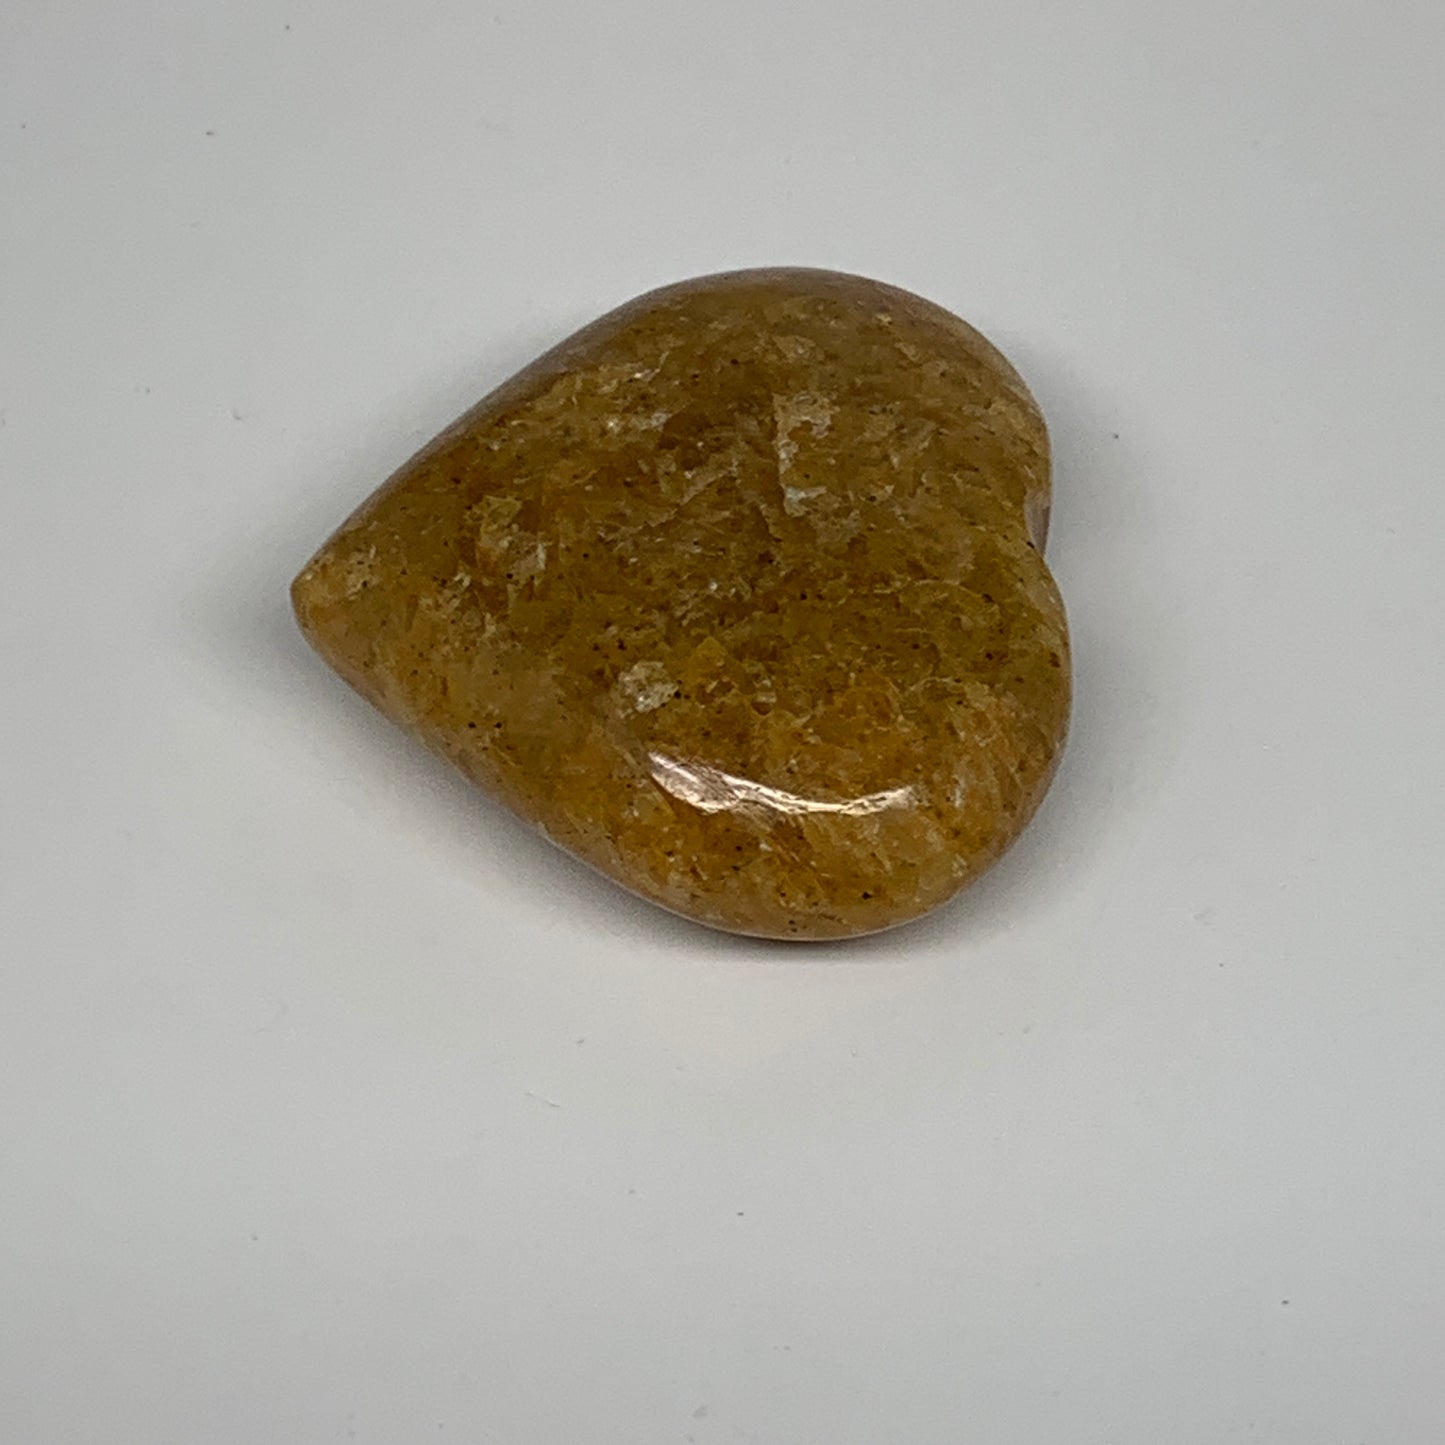 82.8g, 2"x2.2"x0.8", Natural Golden Quartz Heart Small Polished Crystal, B24831